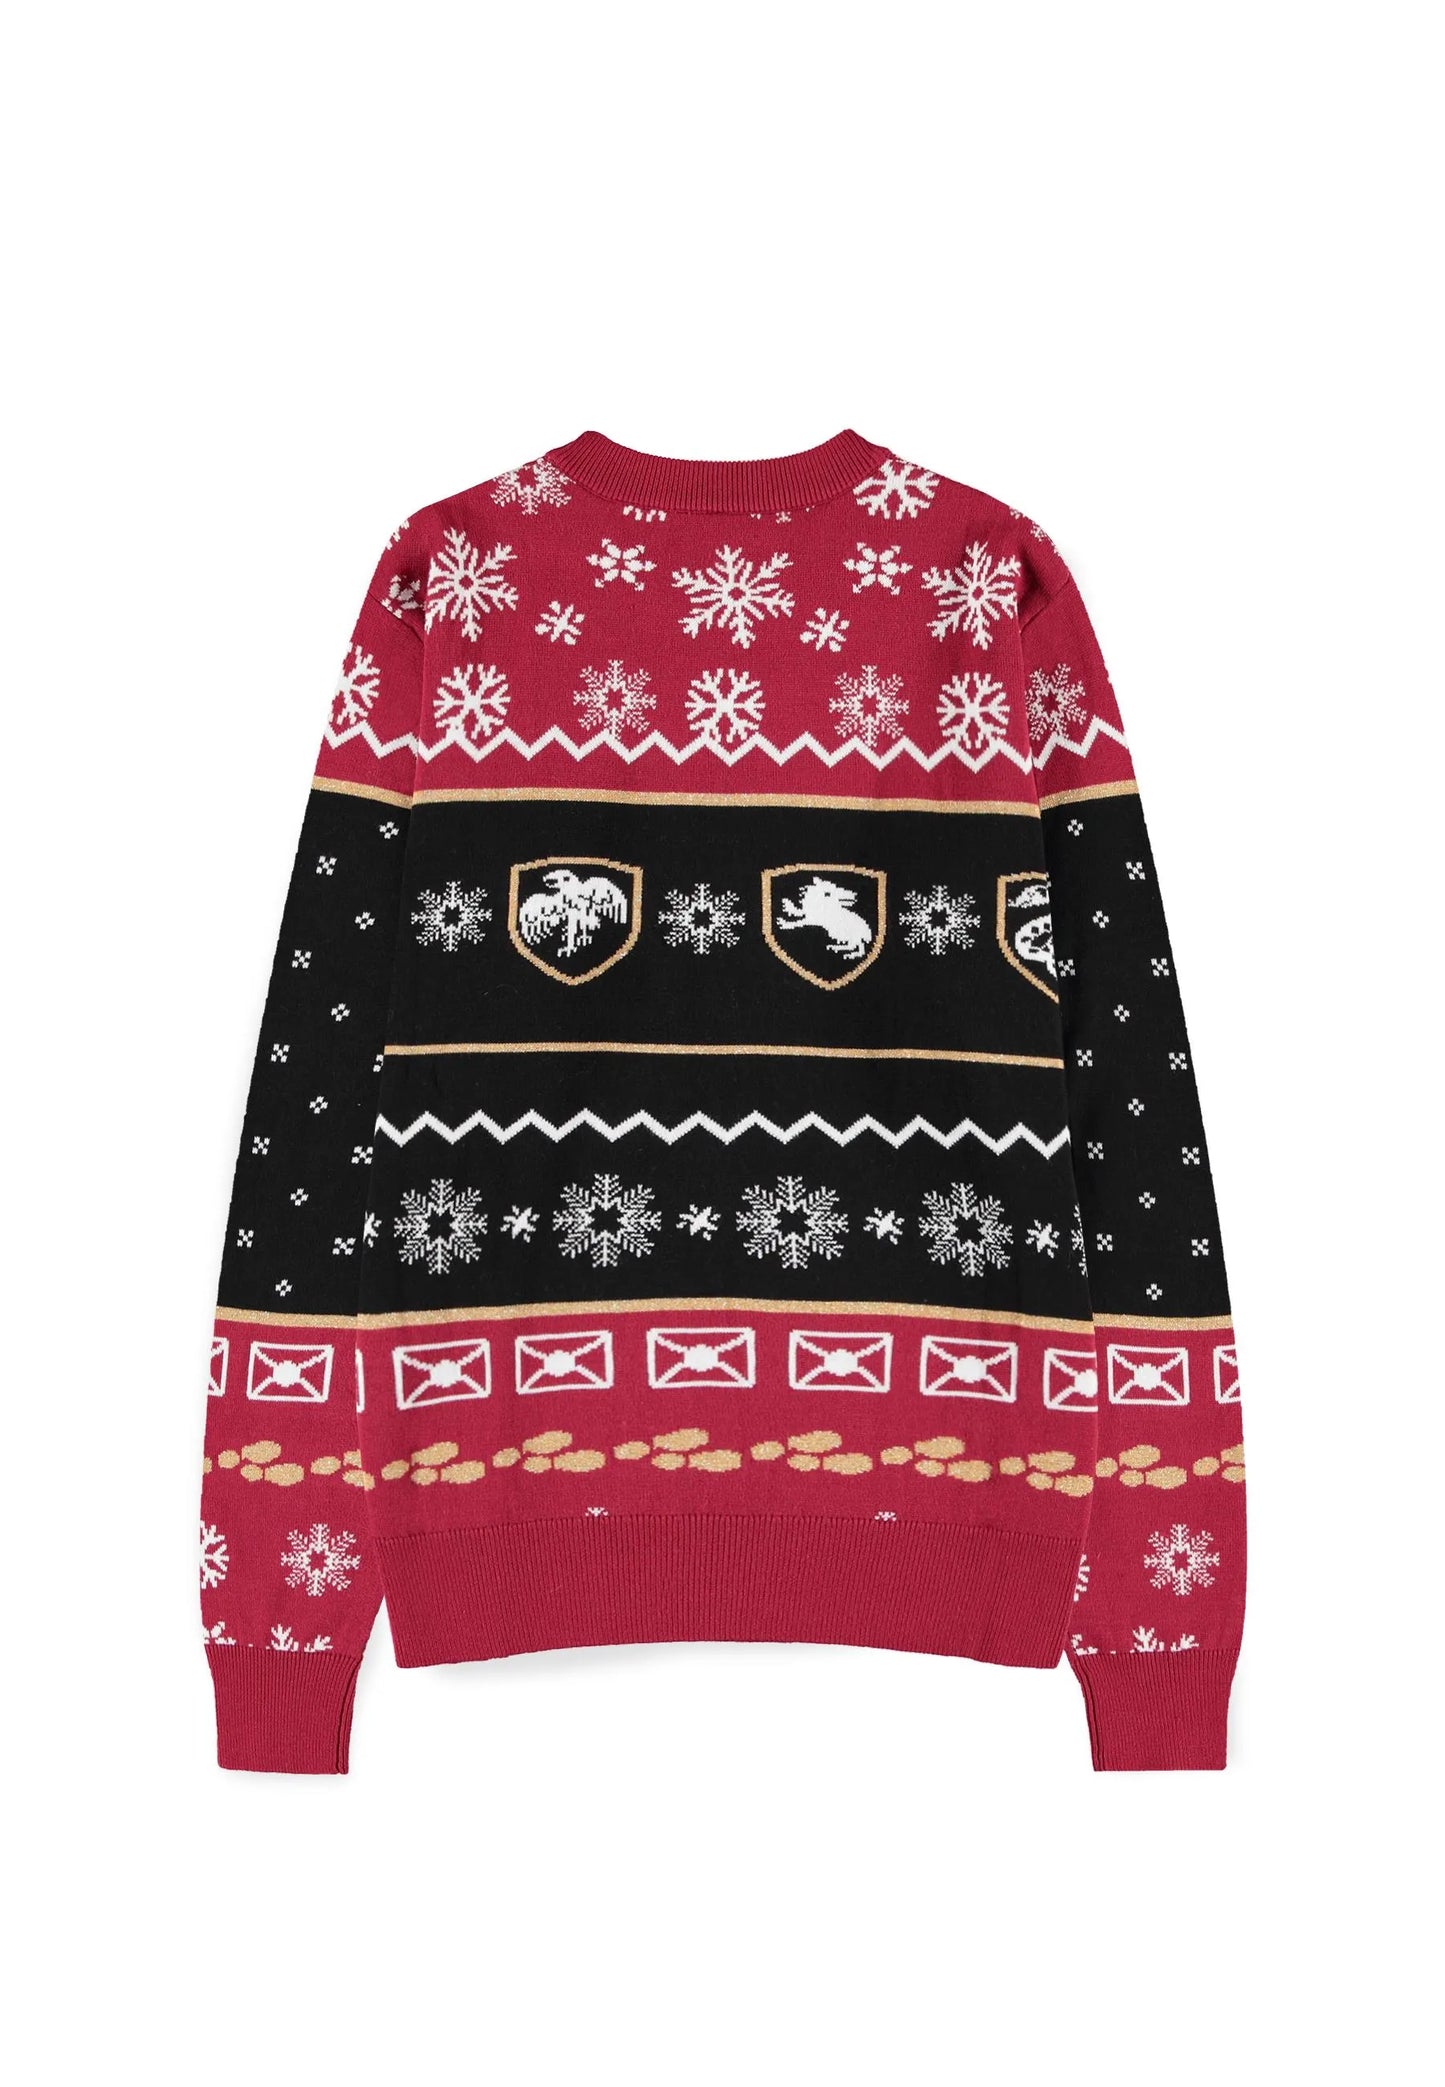 Harry Potter Christmas Sweater - Hogwarts Crest